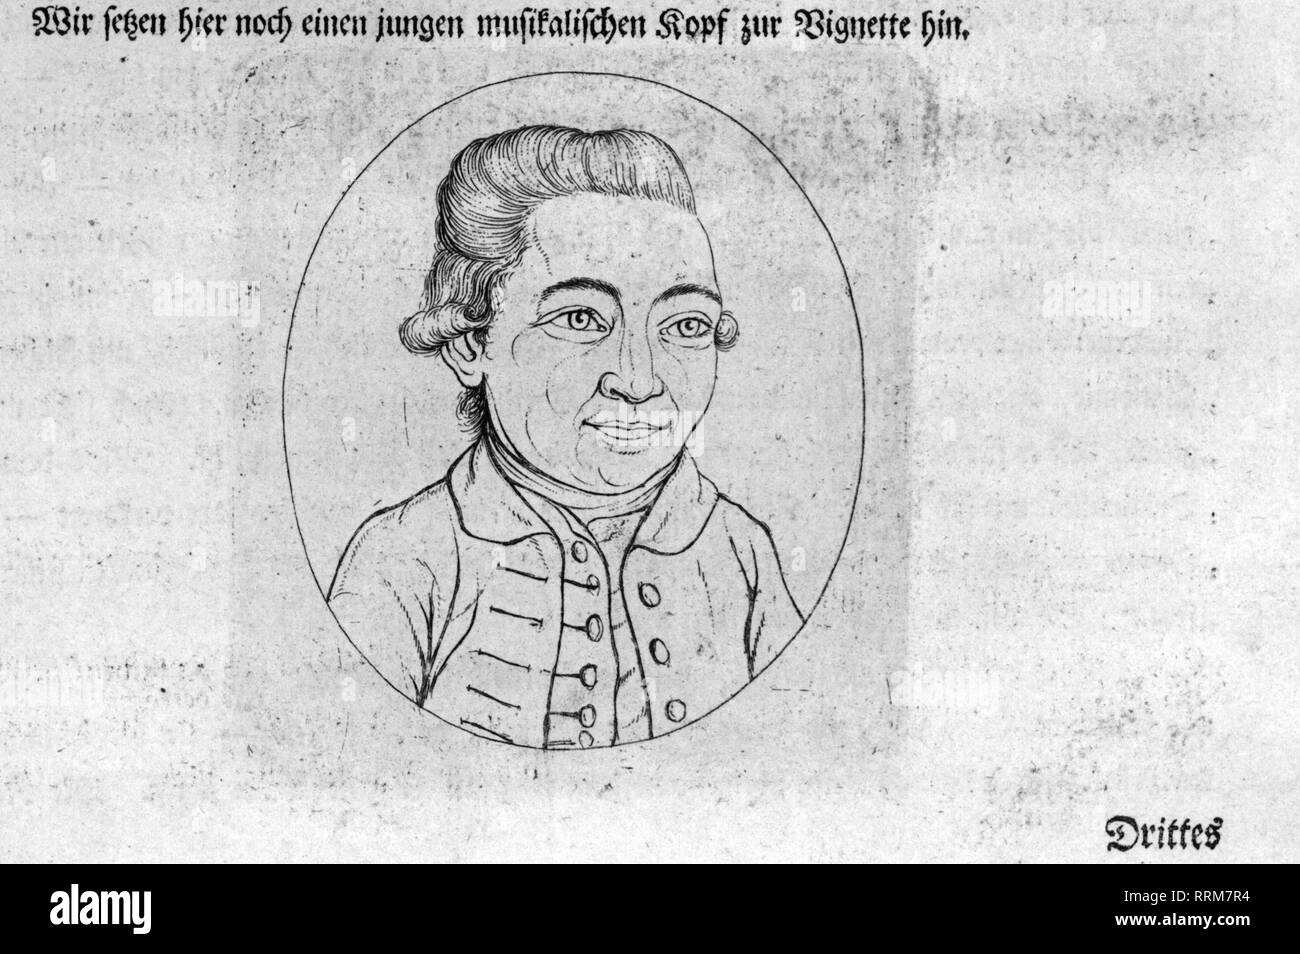 Jommelli, Niccolo, 10.9.1714 - 25.8.1774, compositor italiano contemporáneo, retrato, grabado en cobre, Additional-Rights-Clearance-Info-Not-Available Foto de stock